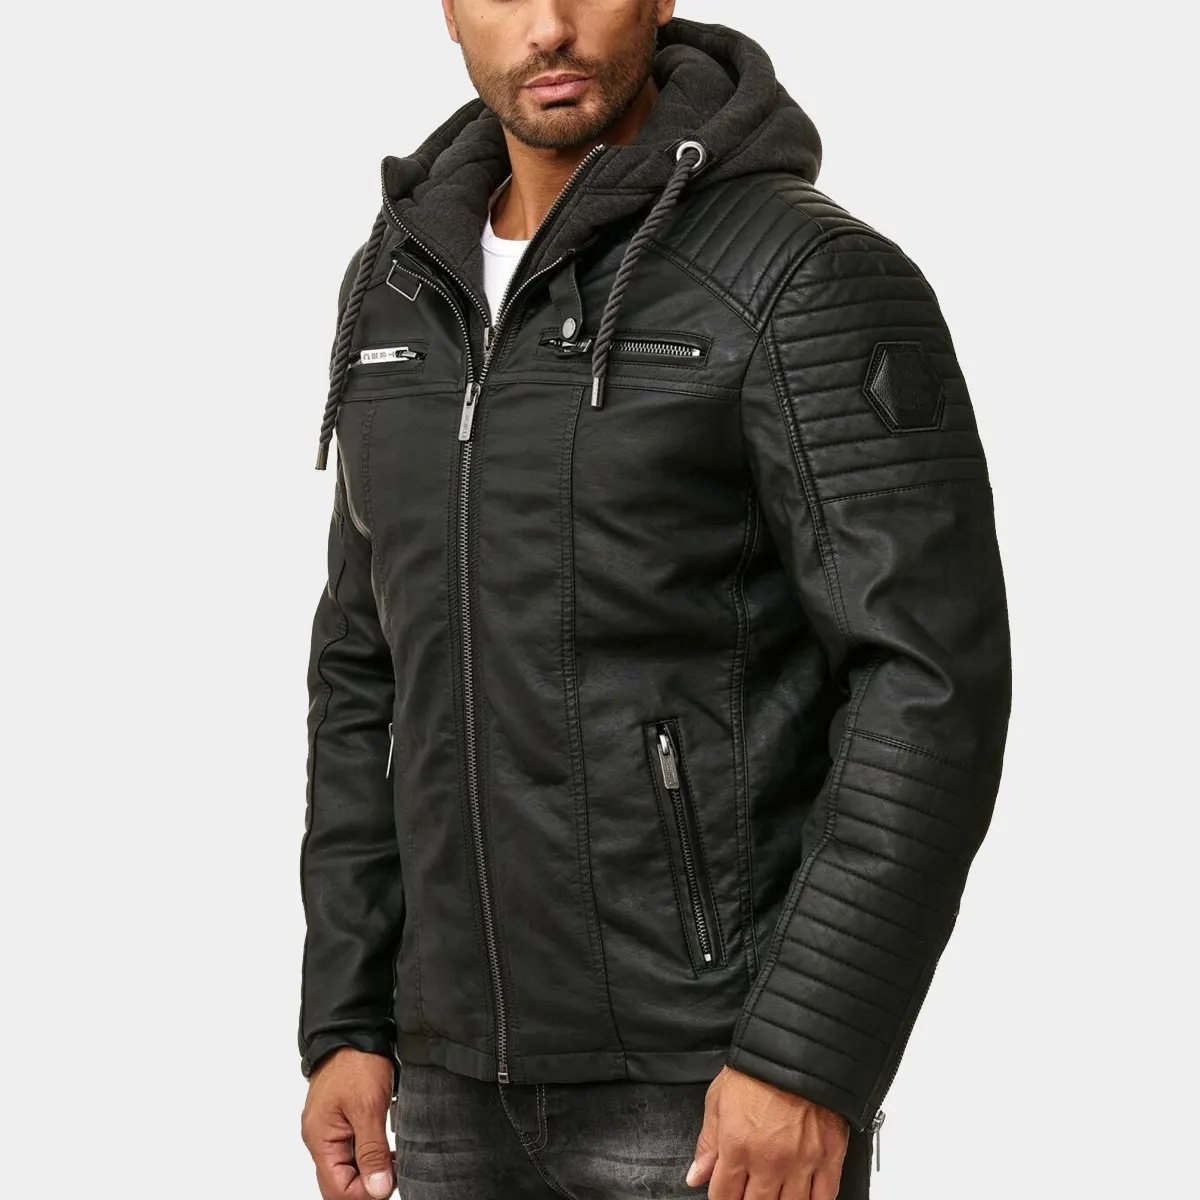 Men leather jacket with hood